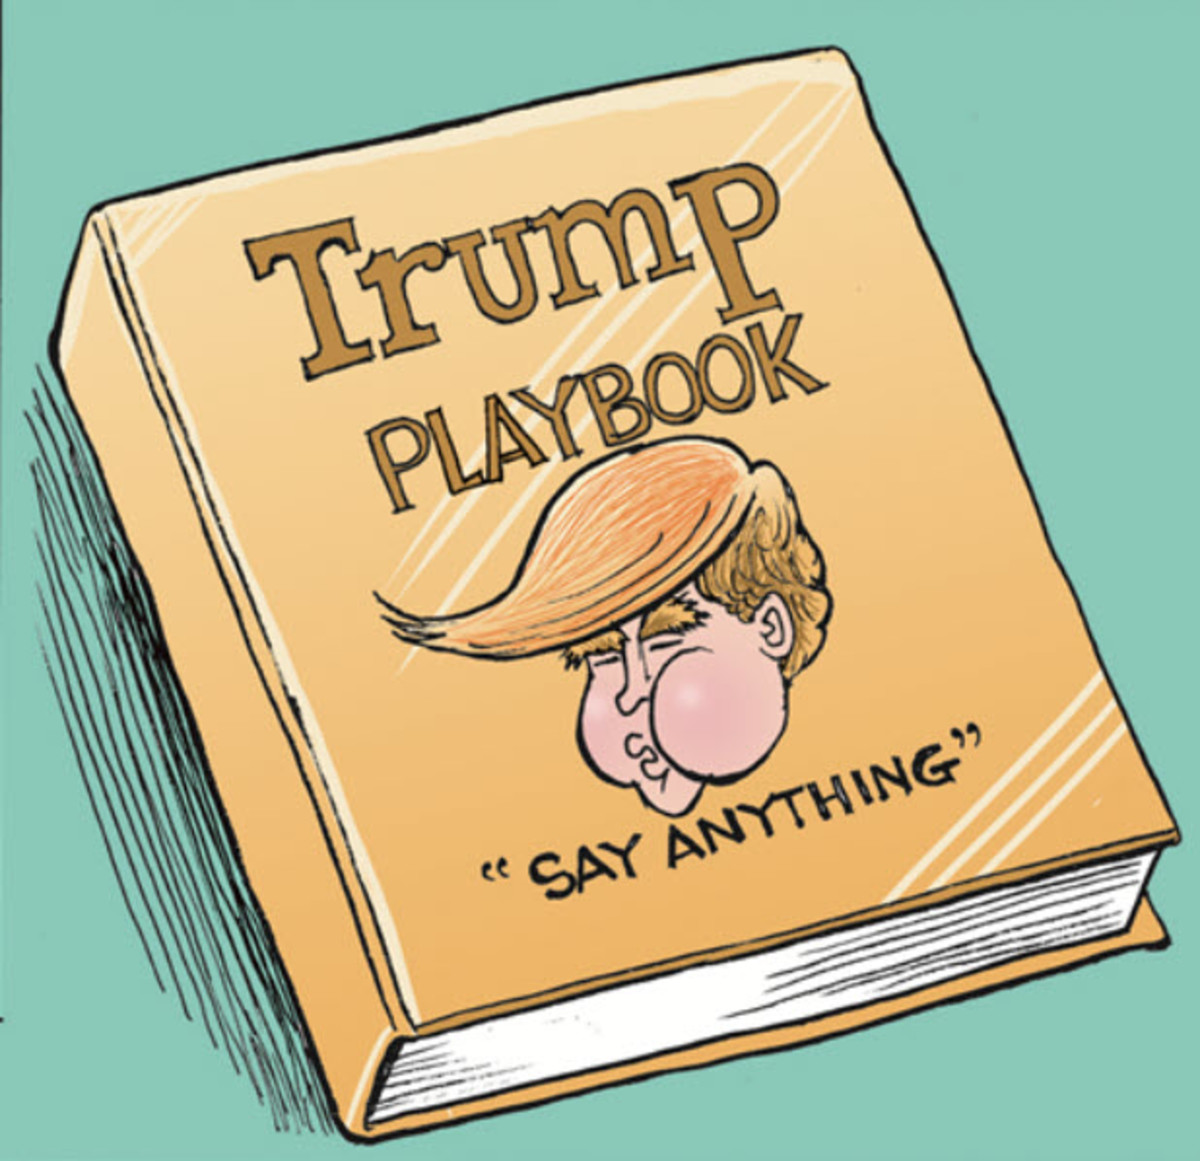 Exposing Trump's Playbook